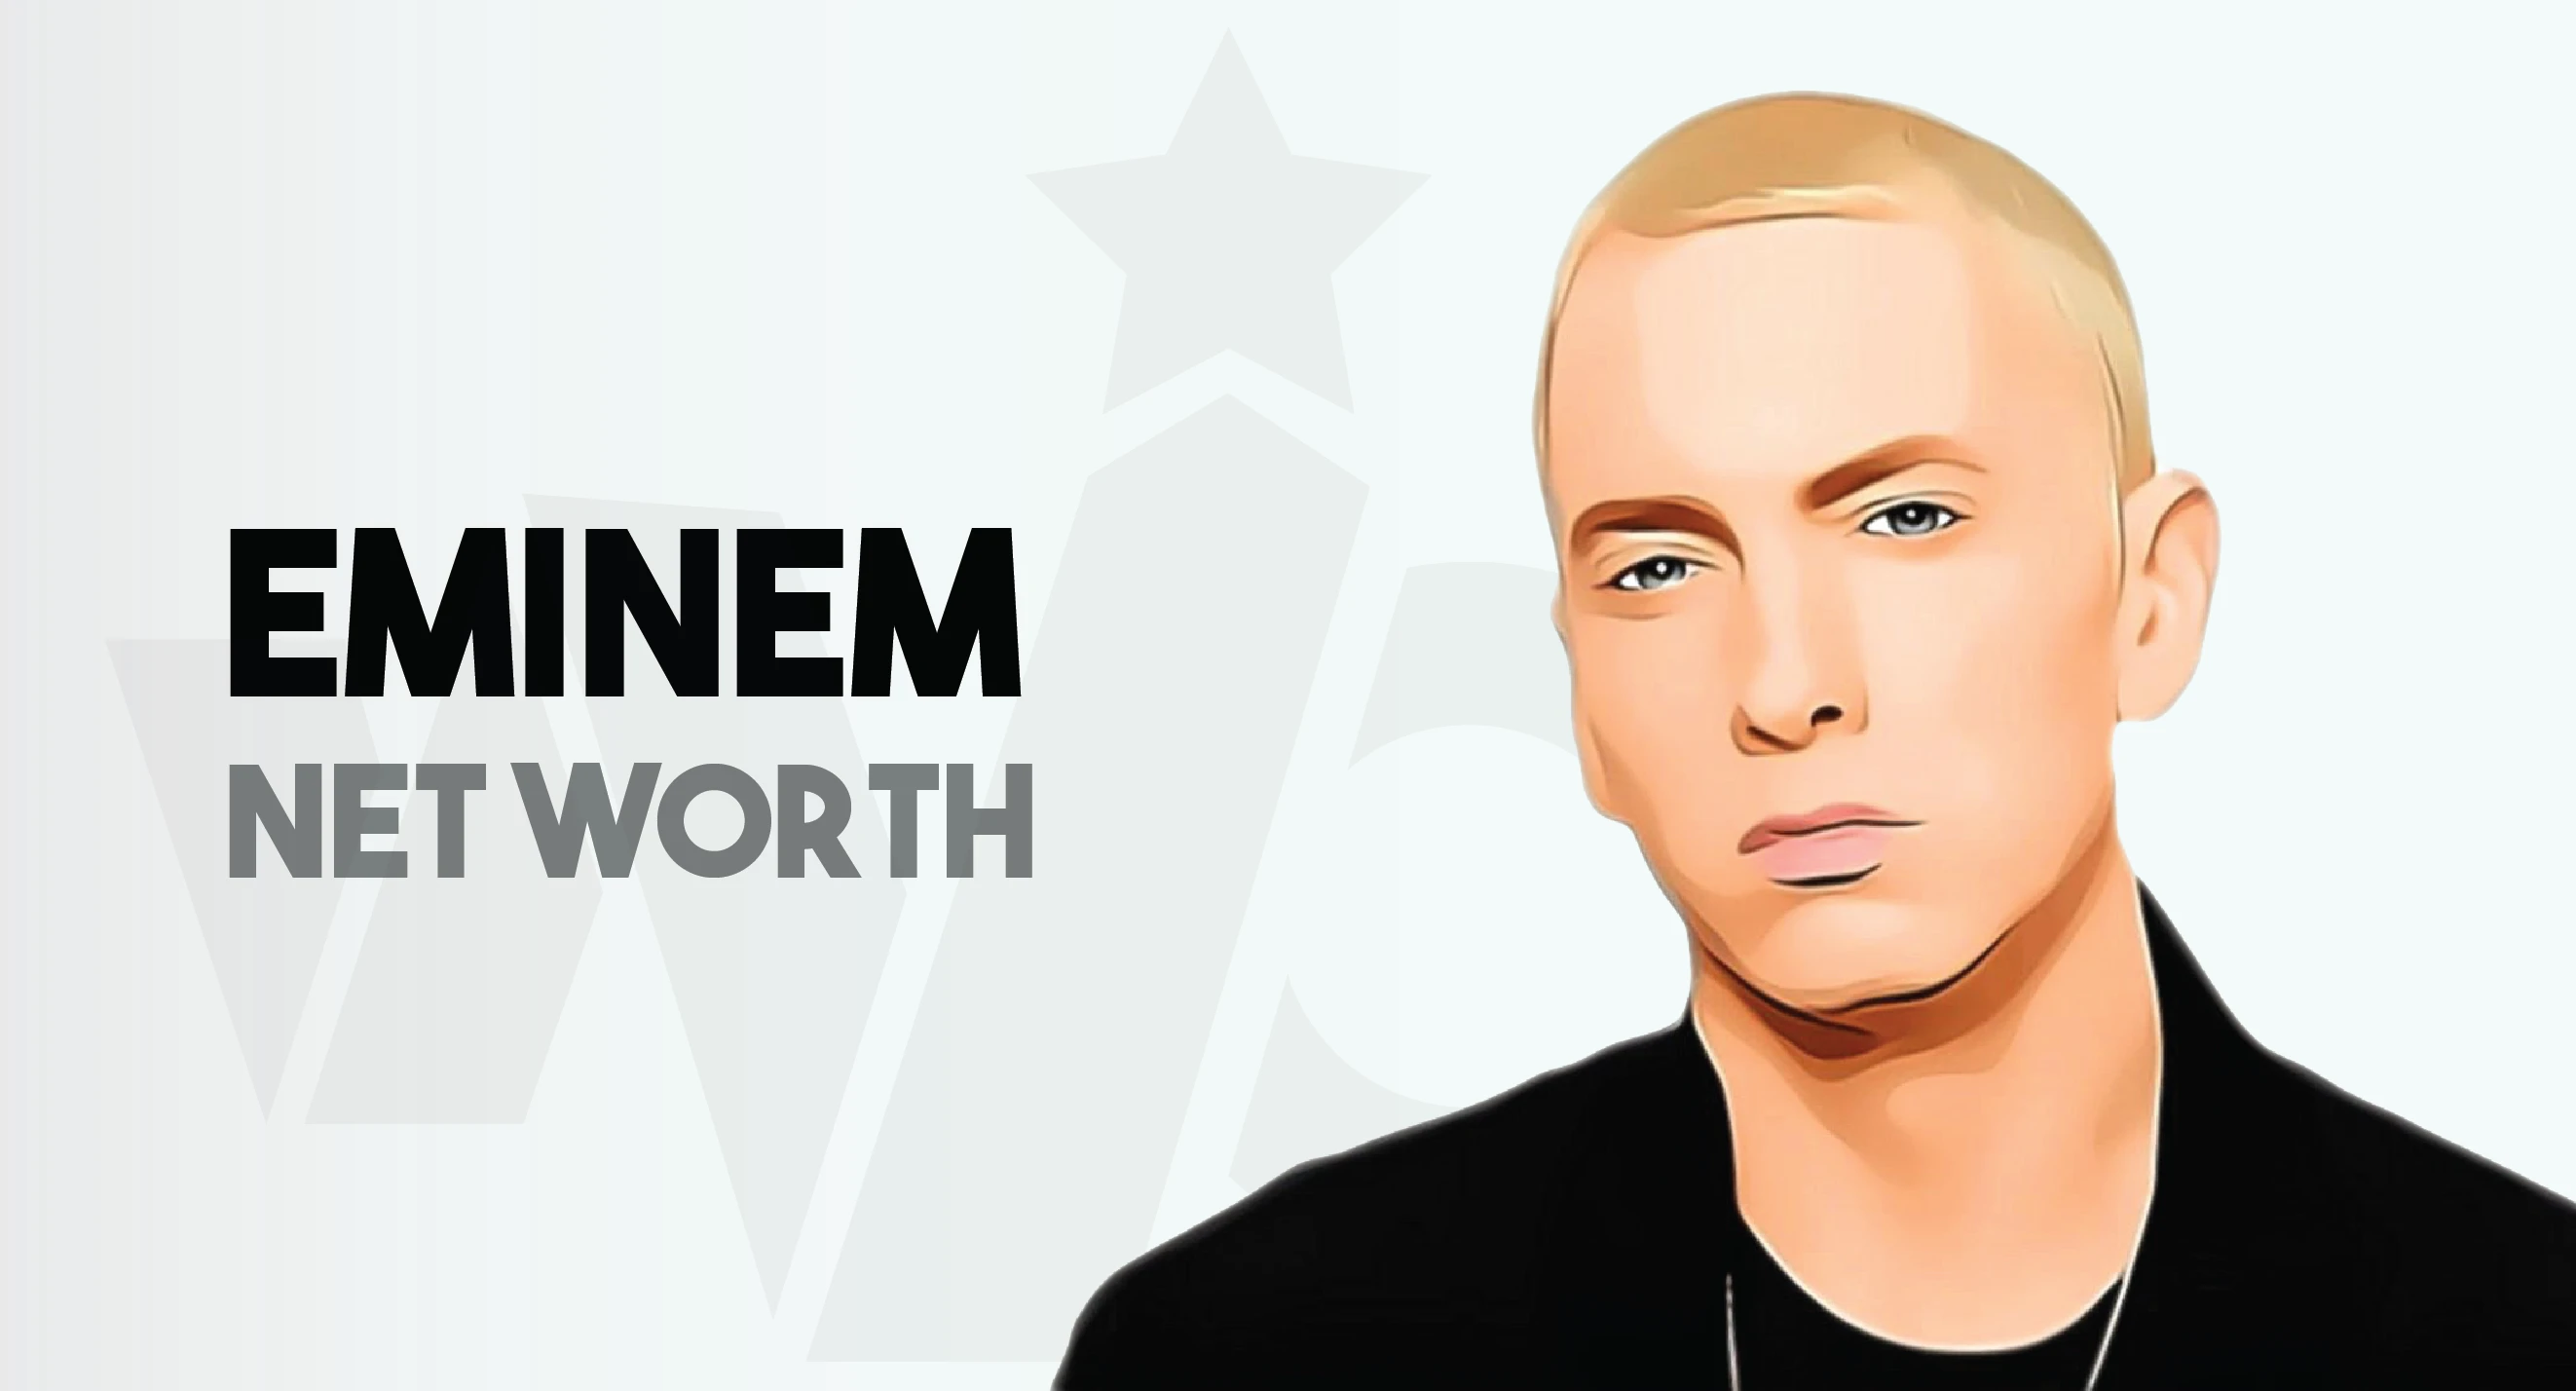 Eminem_Net worth